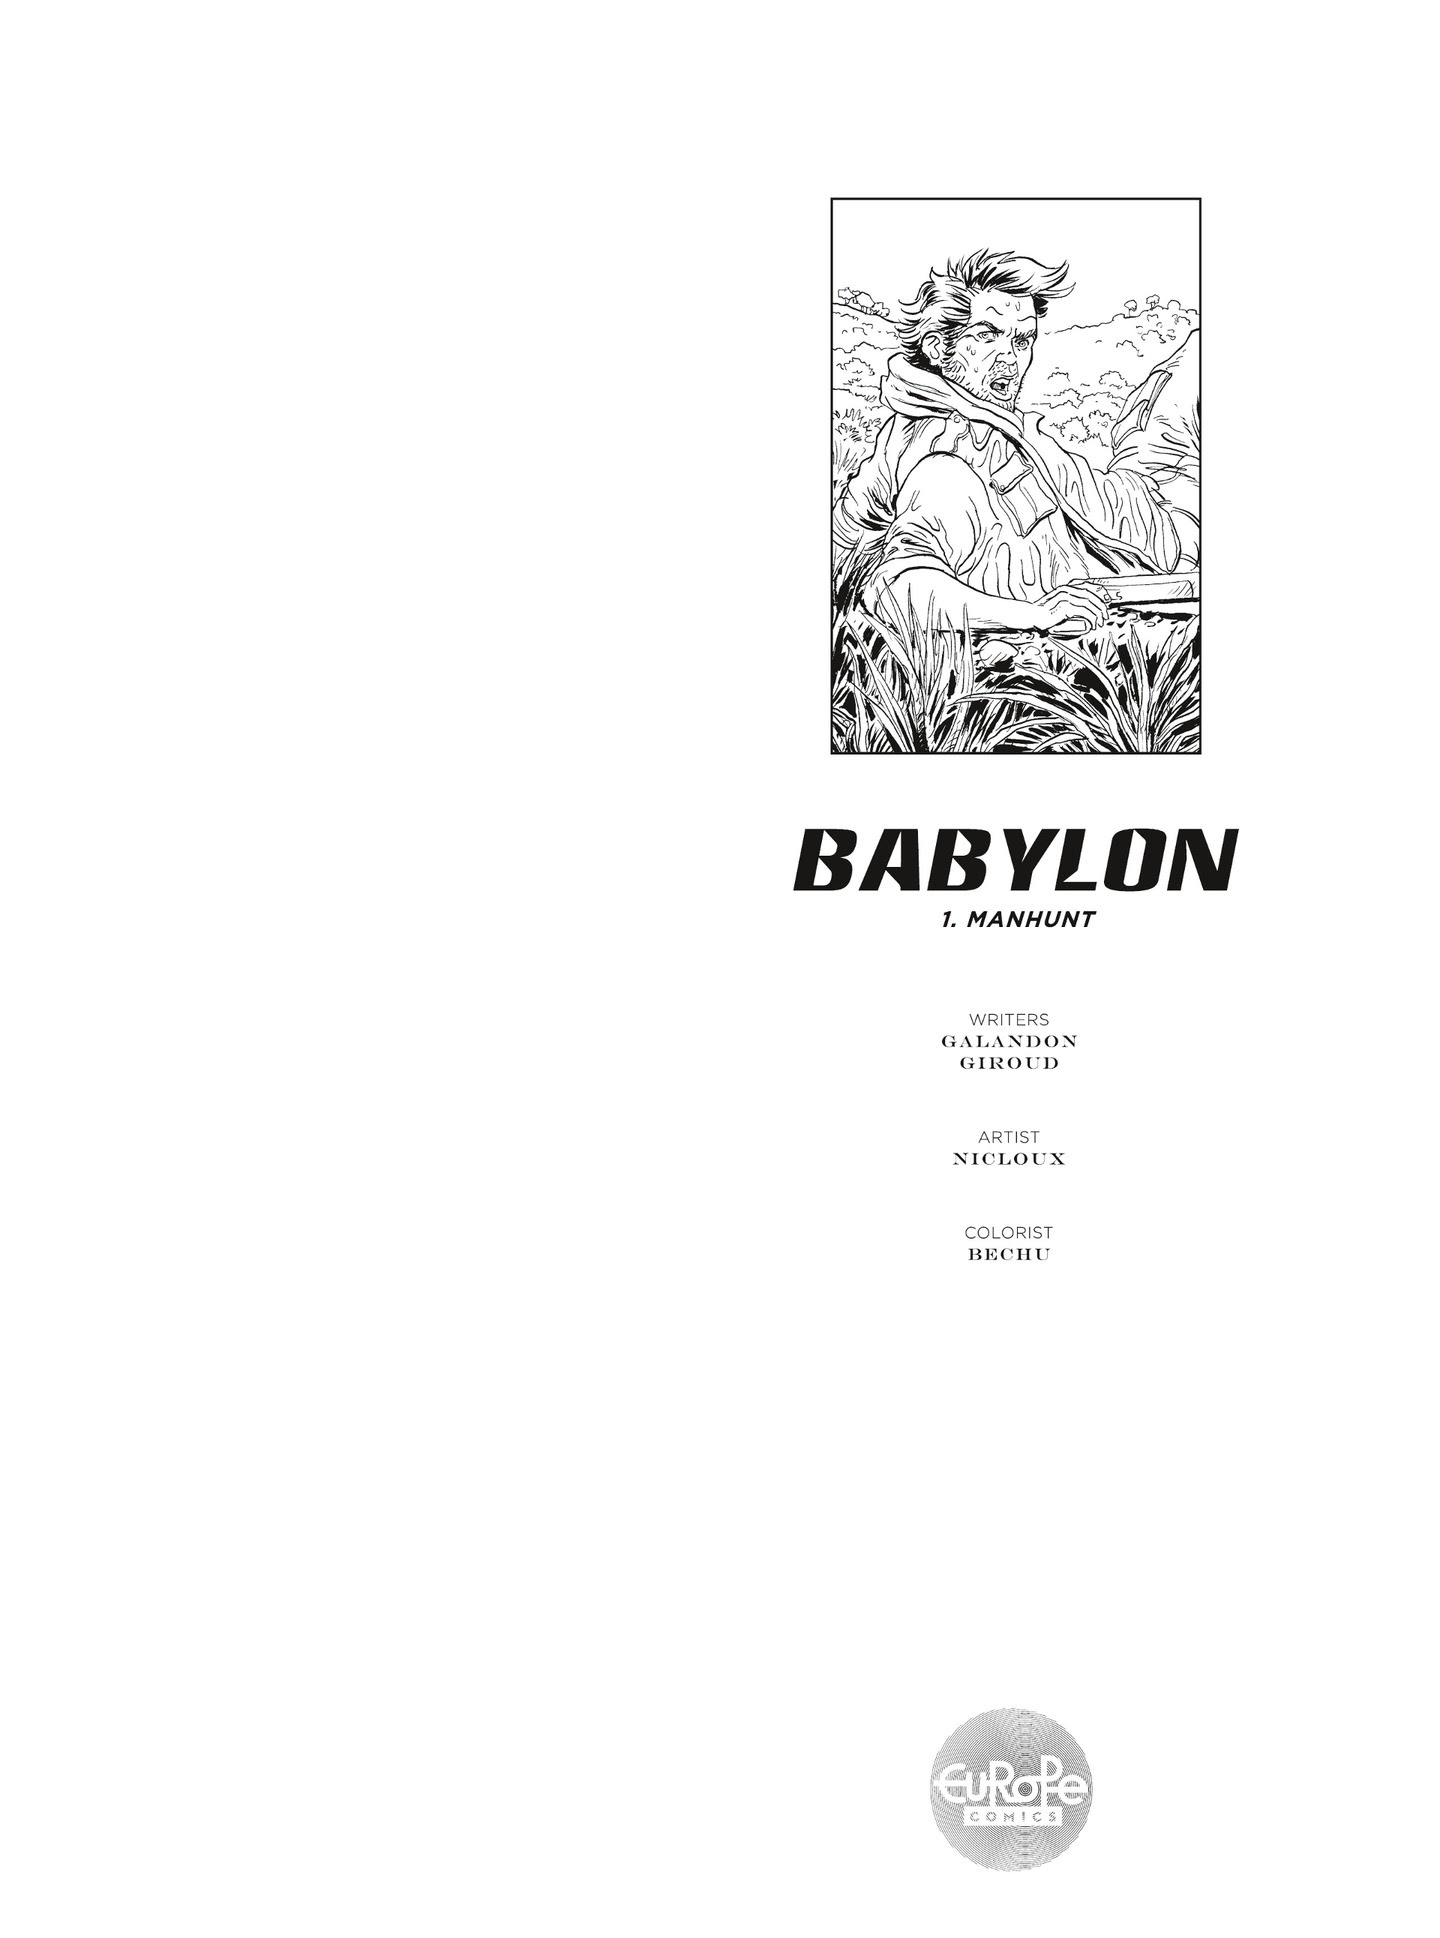 Read online Babylon comic -  Issue # TPB 1 - 2